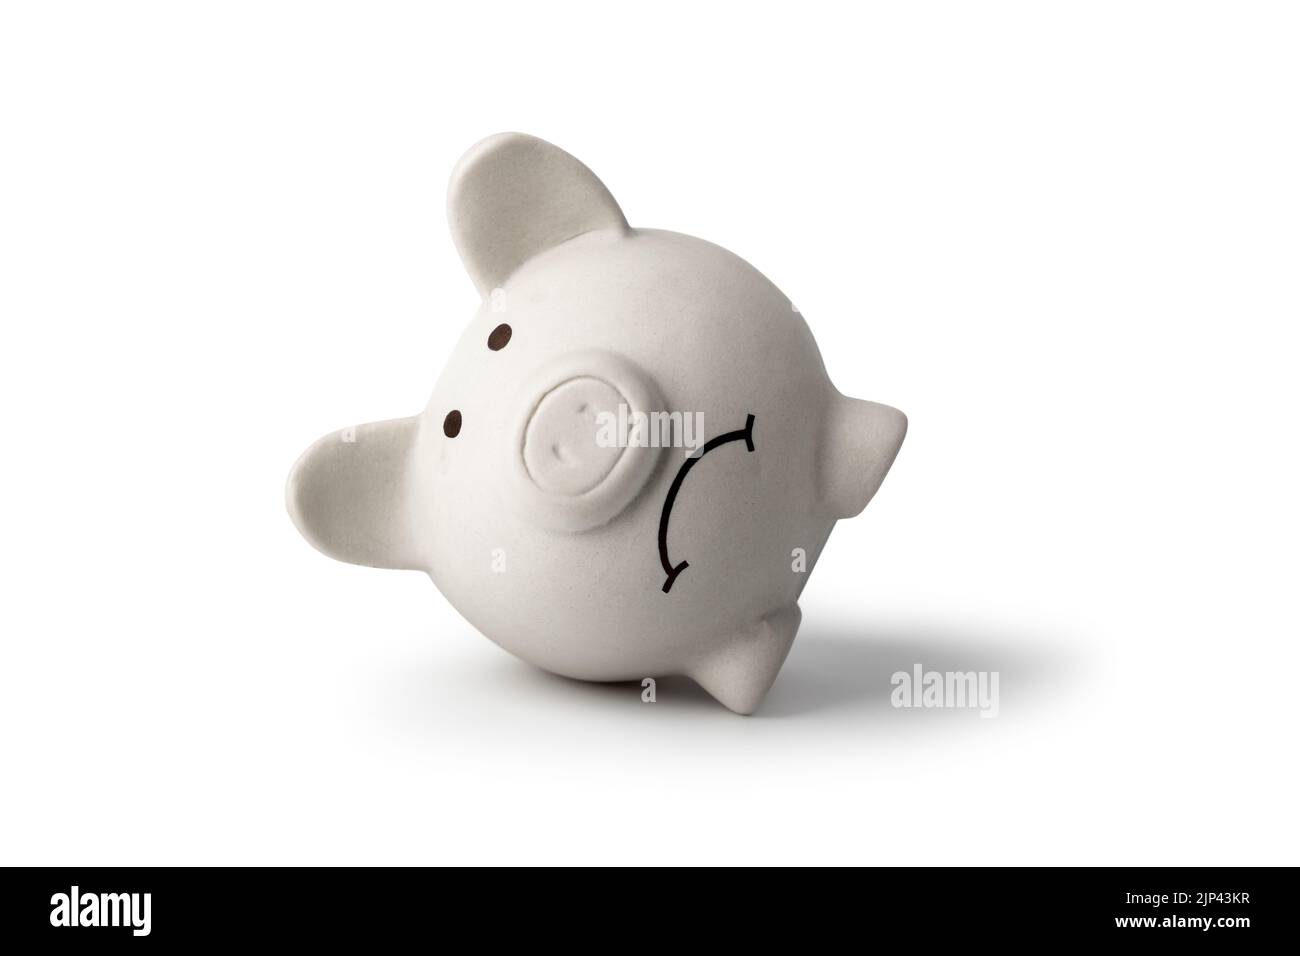 A sad piggy bank isolated on white background, symbolizing the fall of monetary assets. White sadness moneybox. Crisis concept Stock Photo